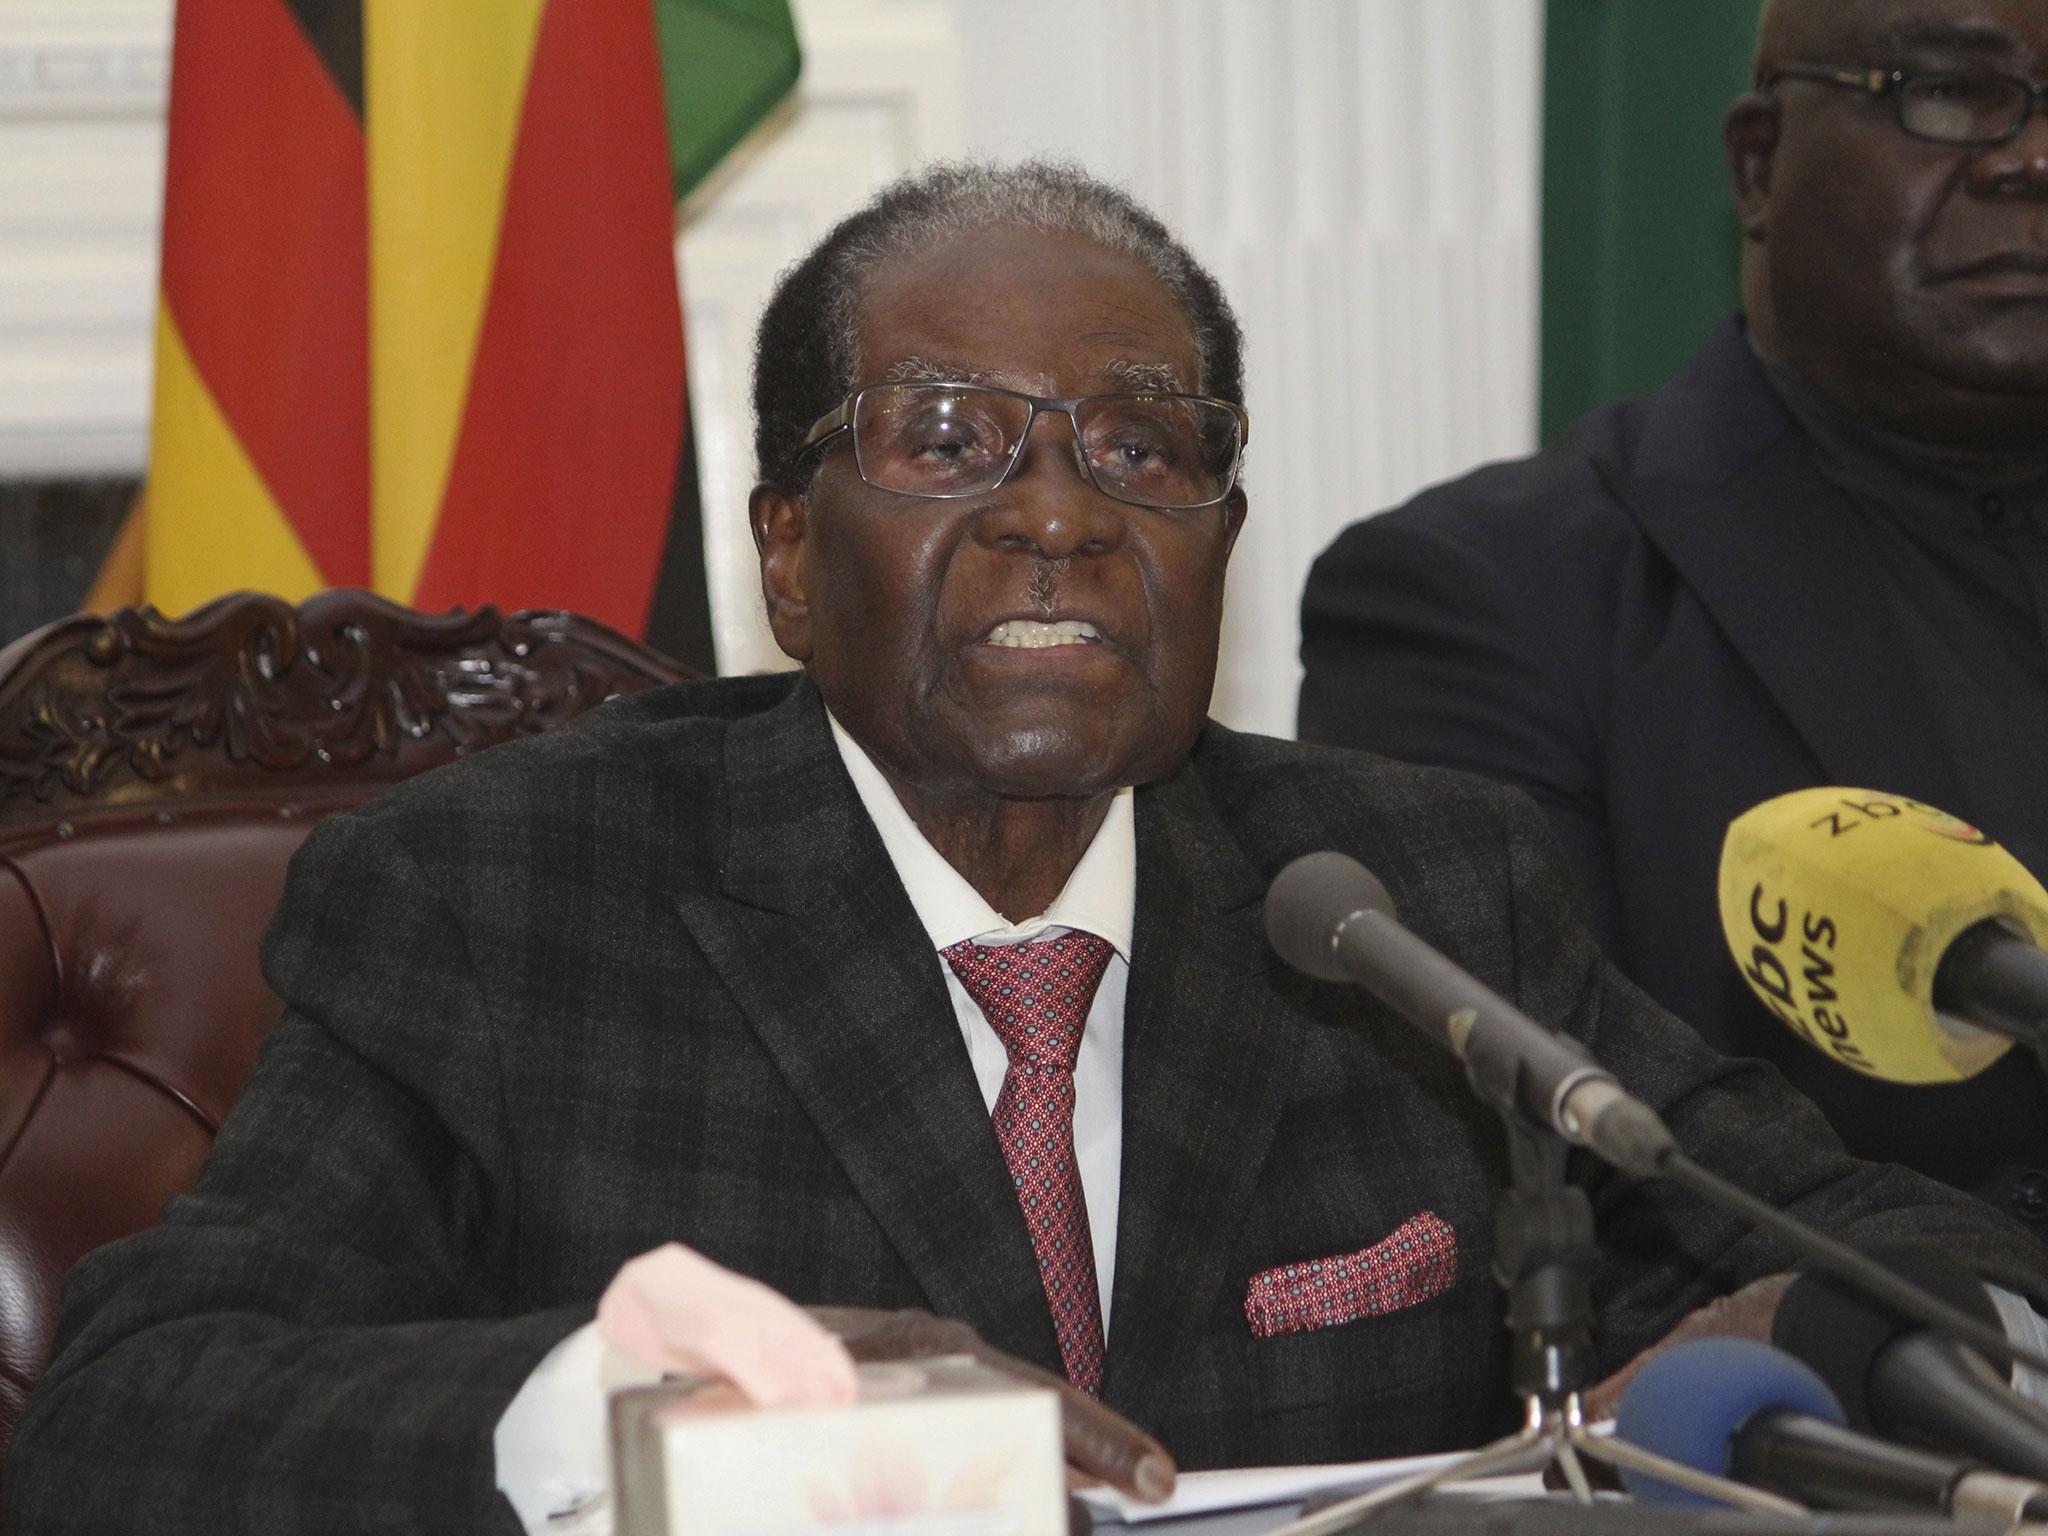 President Robert Mugabe baffled Zimbabwe by ending his address on national television without announcing his resignation